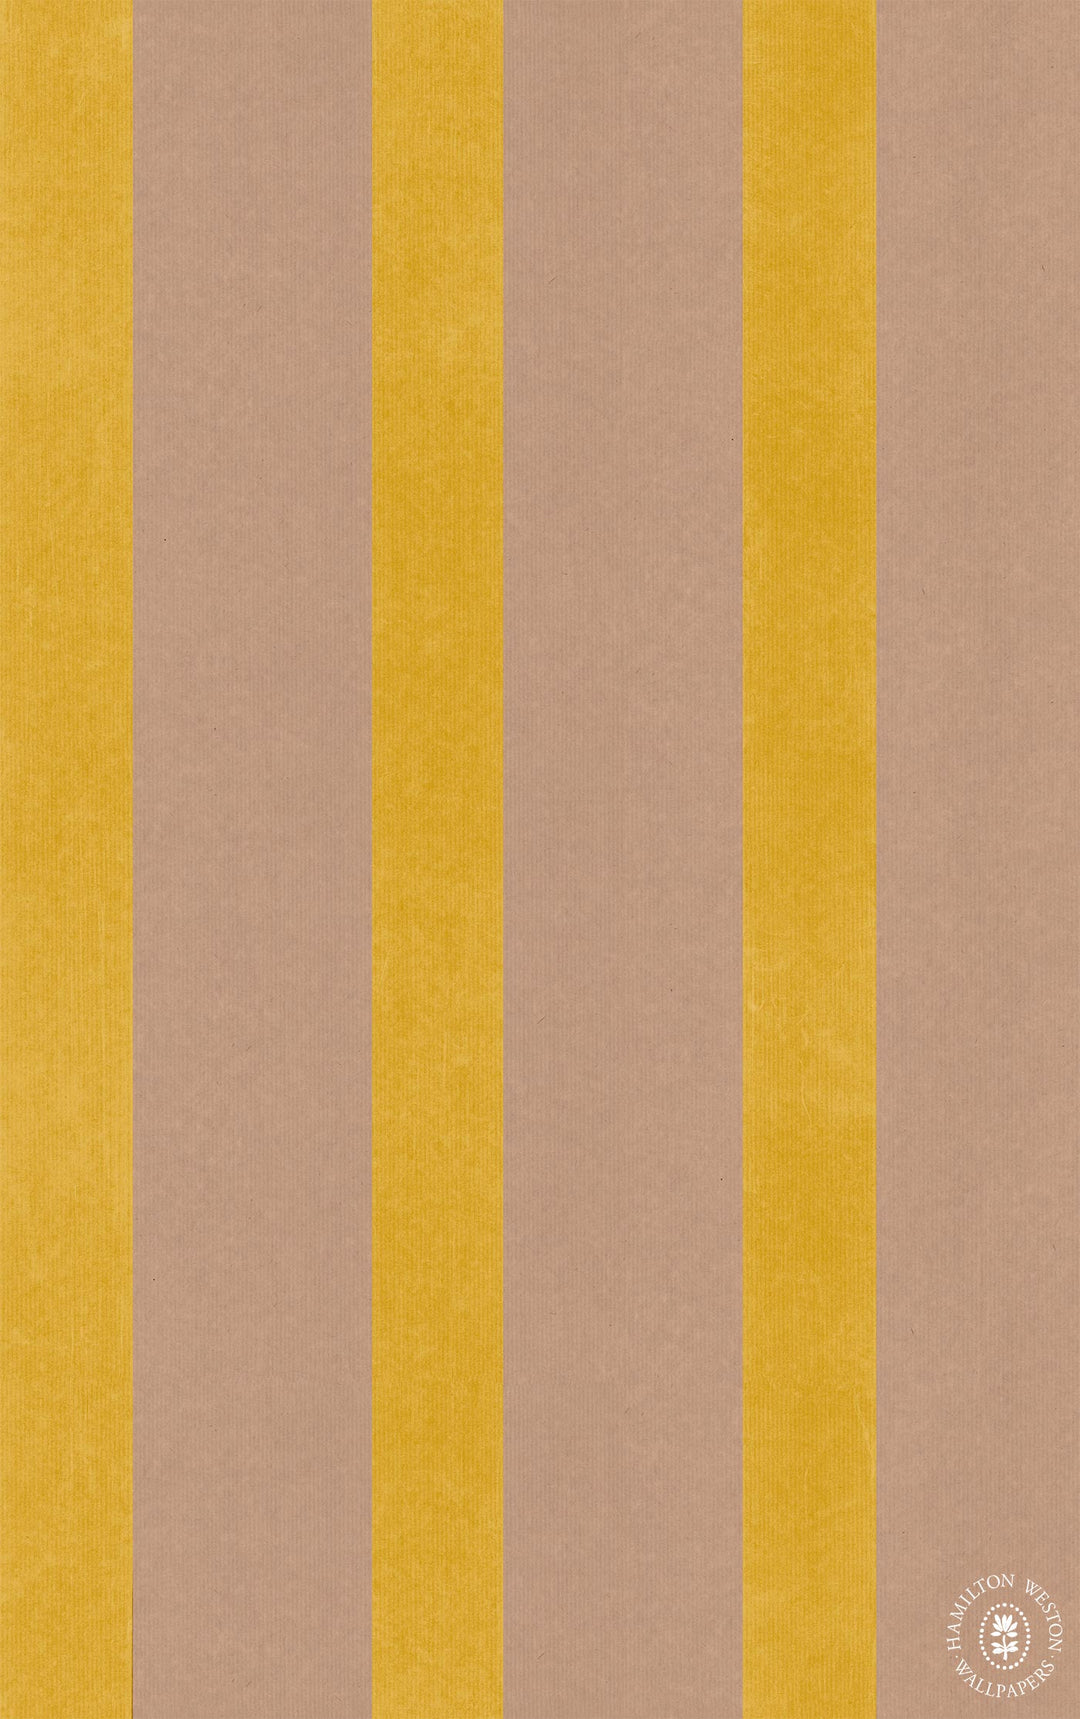 Hamilton-weston-wallpaper-adam-bray-brown-paper-stripe-collection-brown-yellow-stripe-wallpaper-british-collaboration